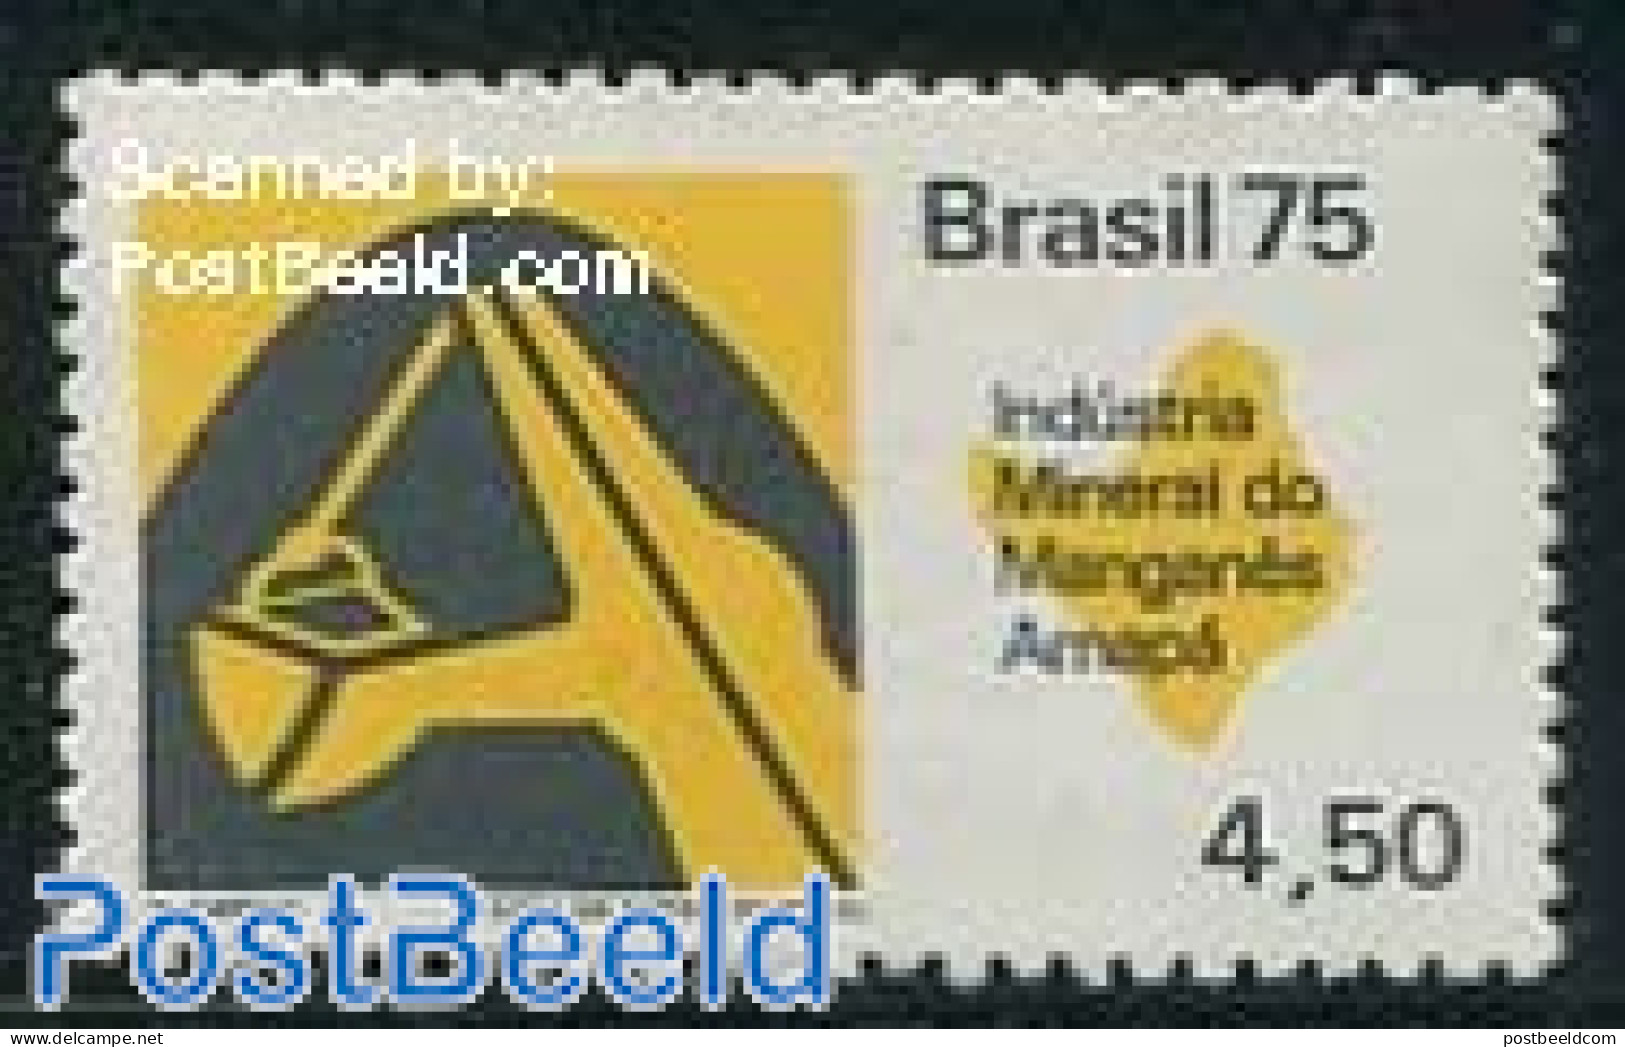 Brazil 1975 4.50Cr, Stamp Out Of Set, Mint NH, Science - Mining - Ongebruikt